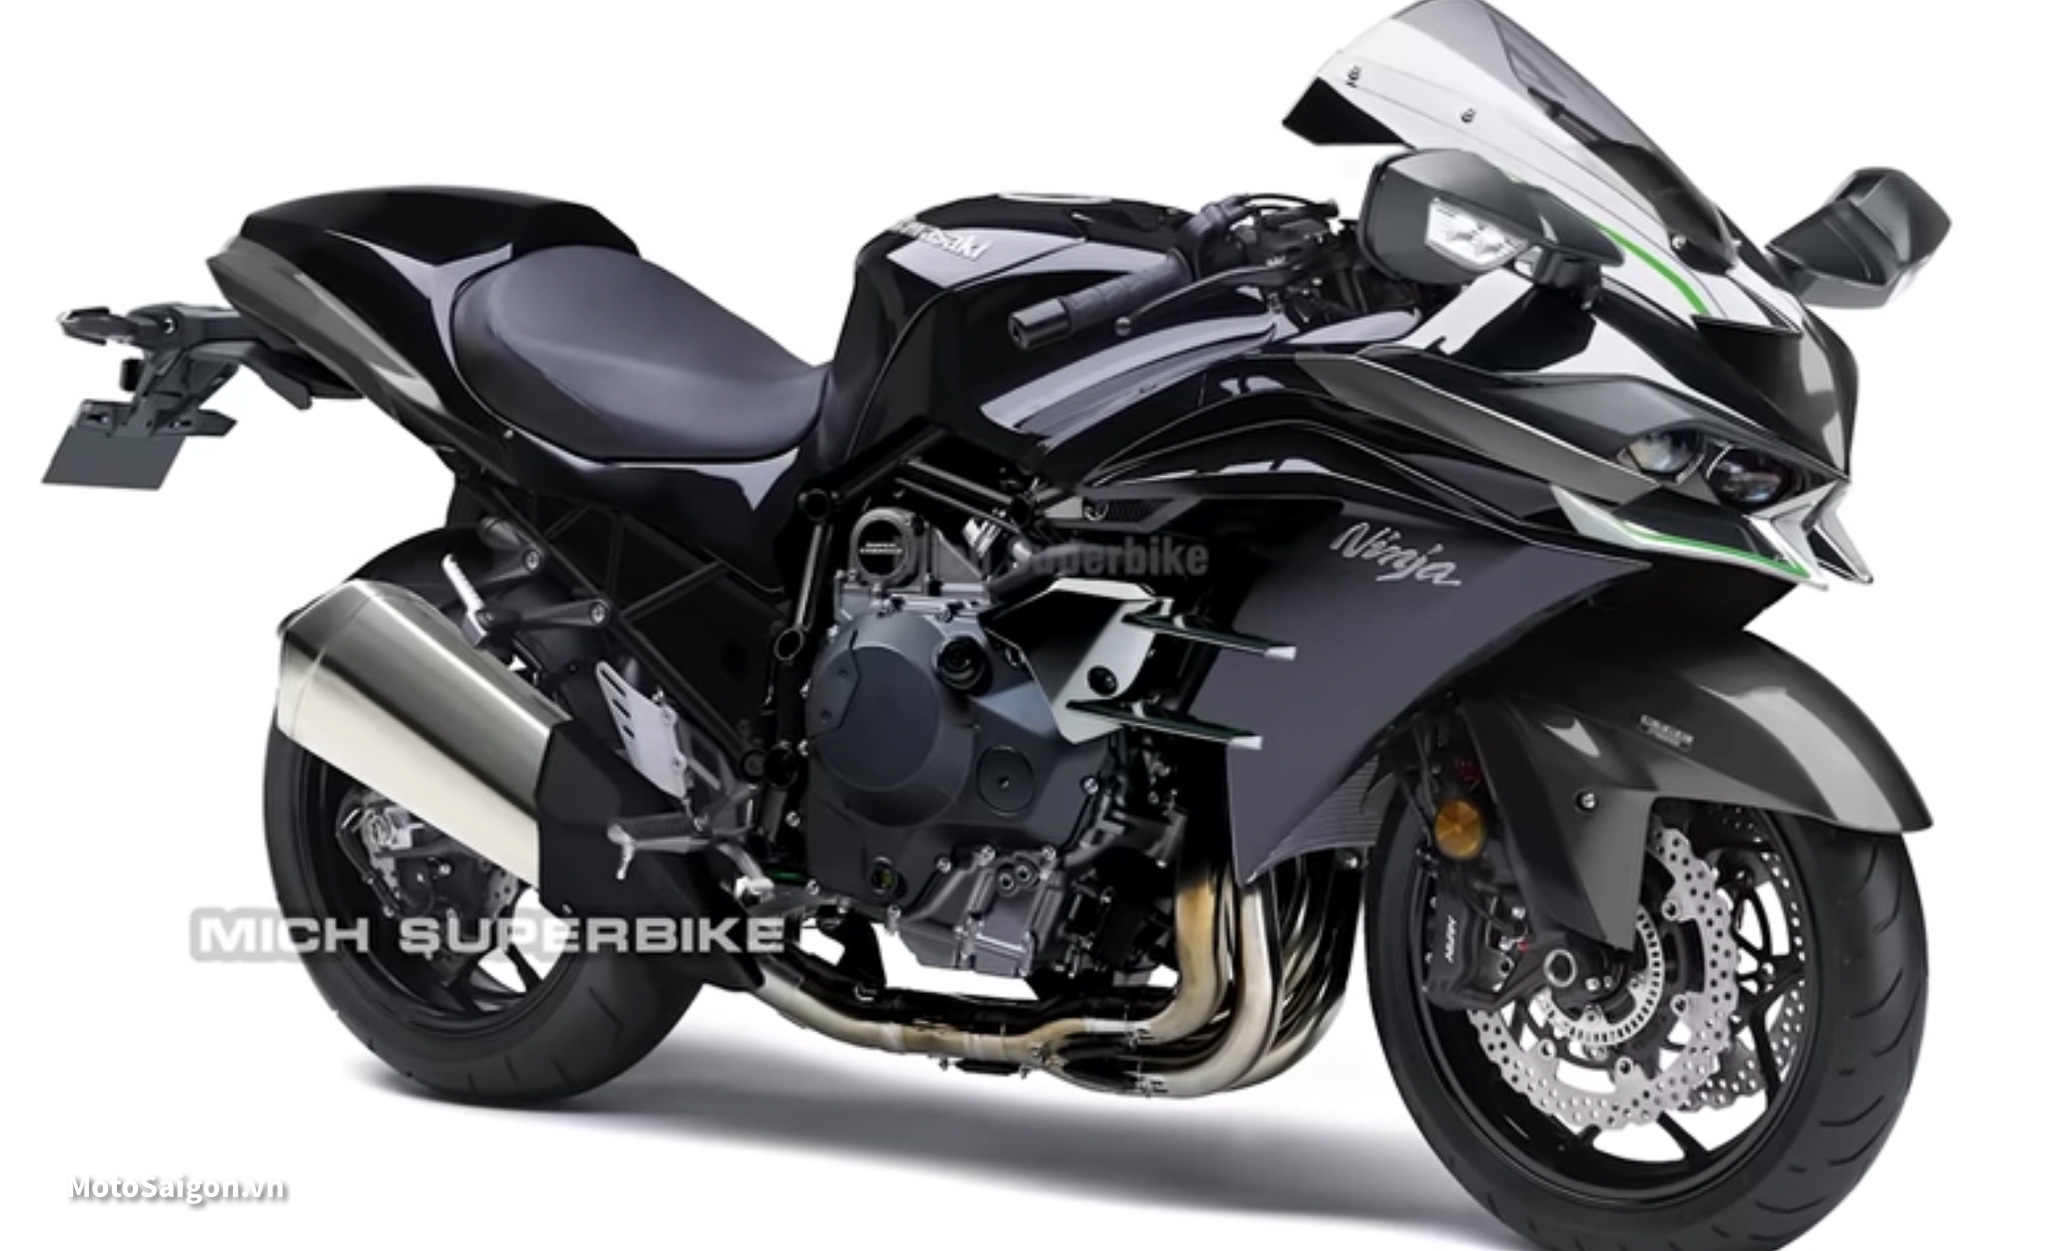 Kawasaki Ninja ZX-15R 1500cc công suất 300hp lộ ảnh